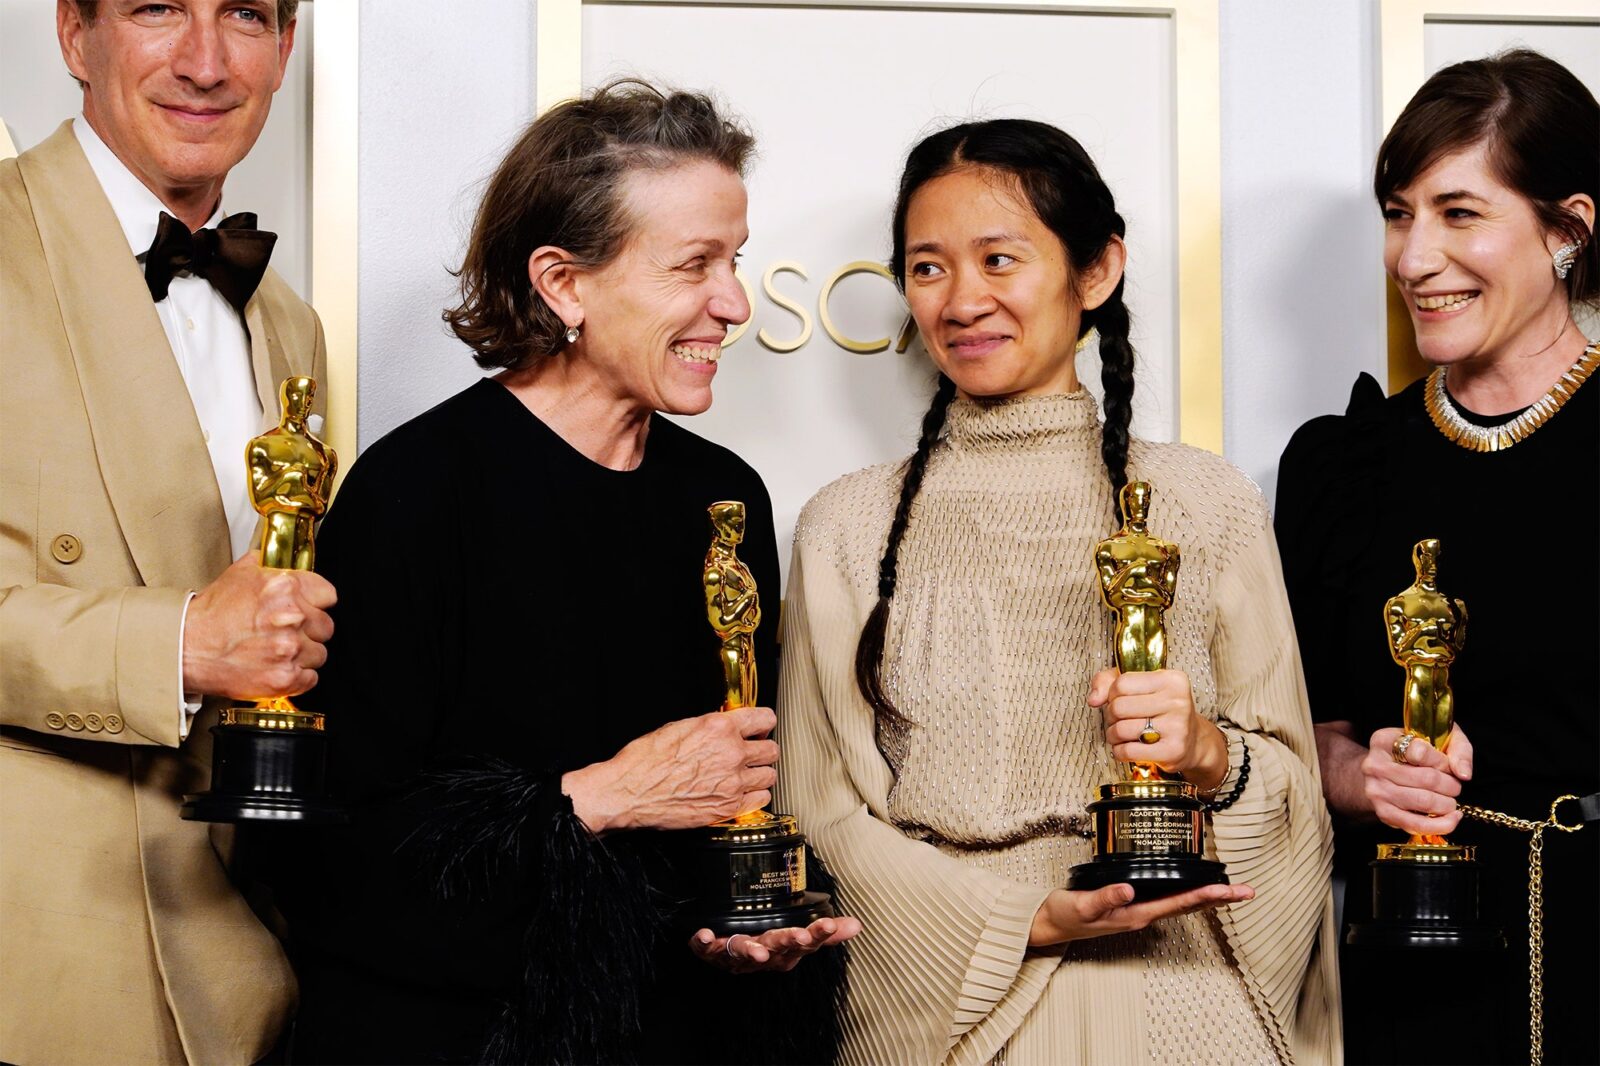 Oscars Winners 2021: Who won what?